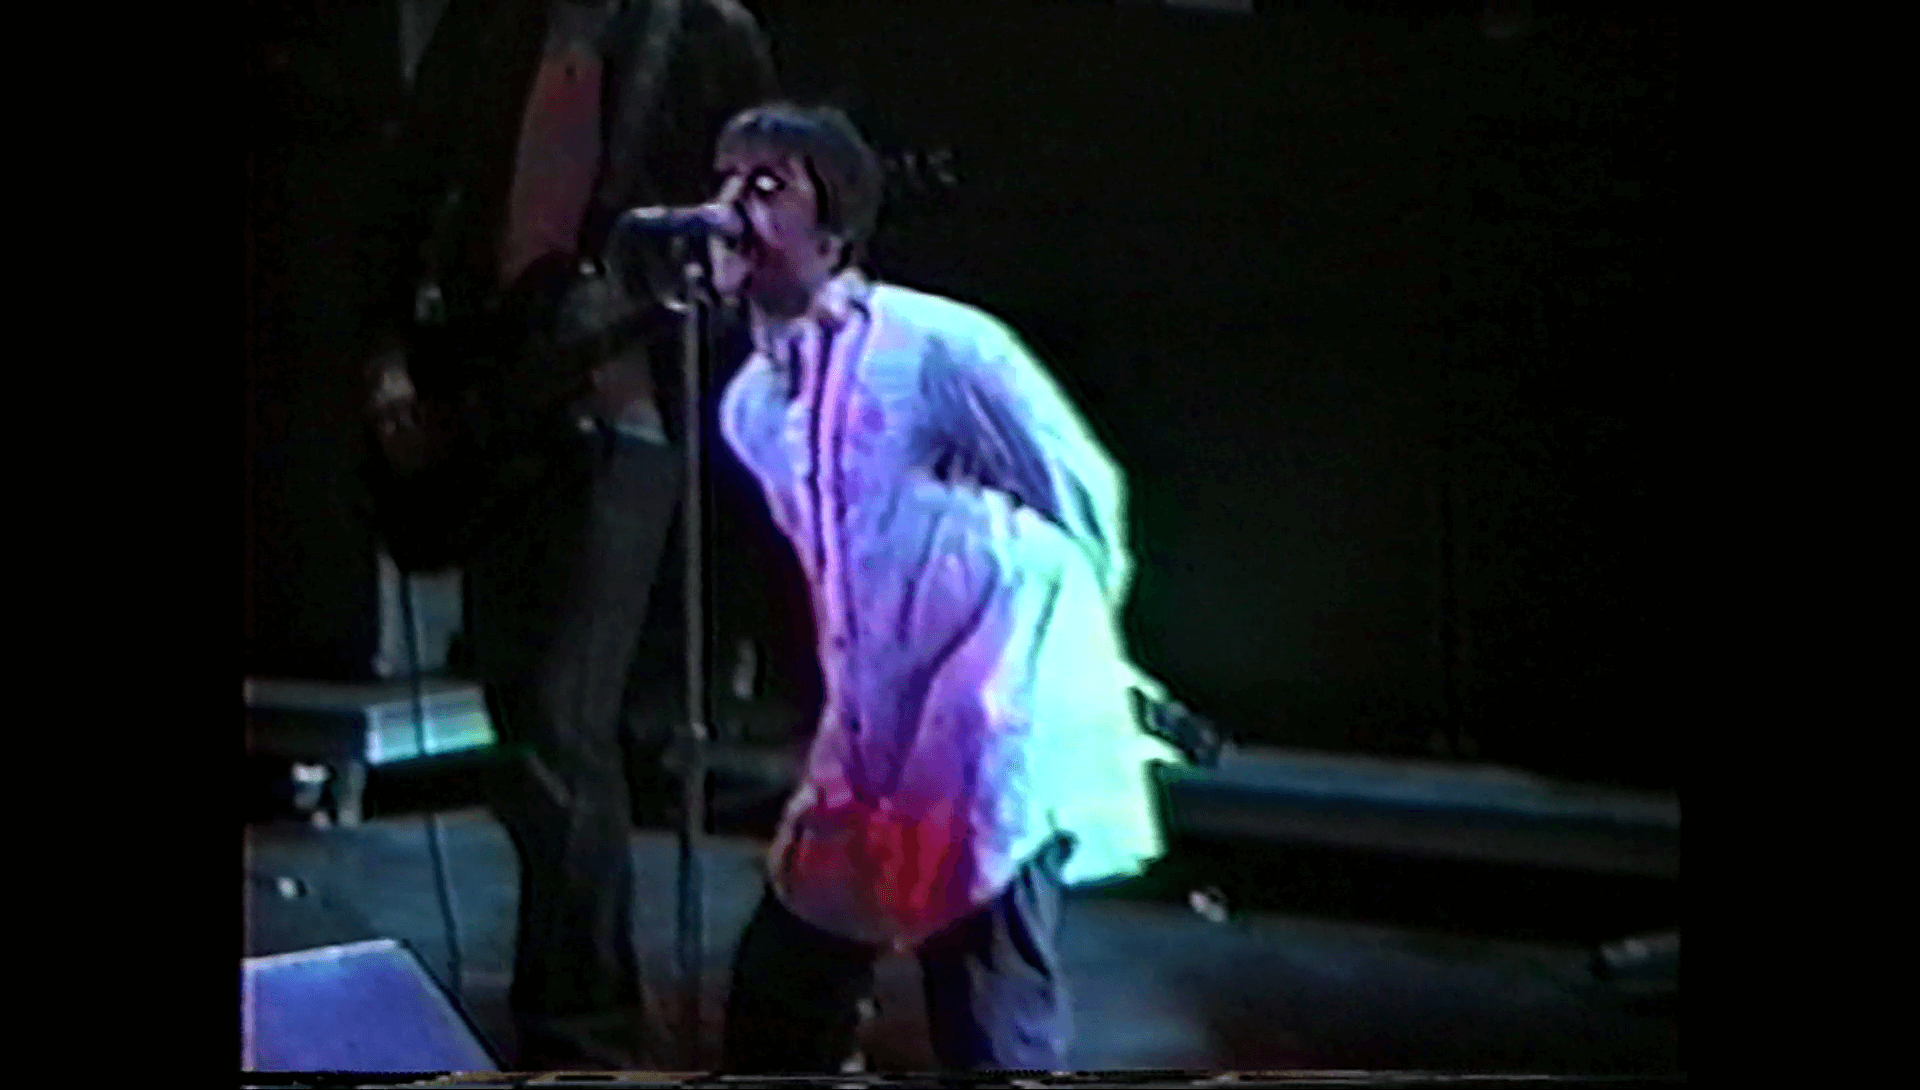 Oasis at Radio City Music Hall, New York, USA - June 9, 2001